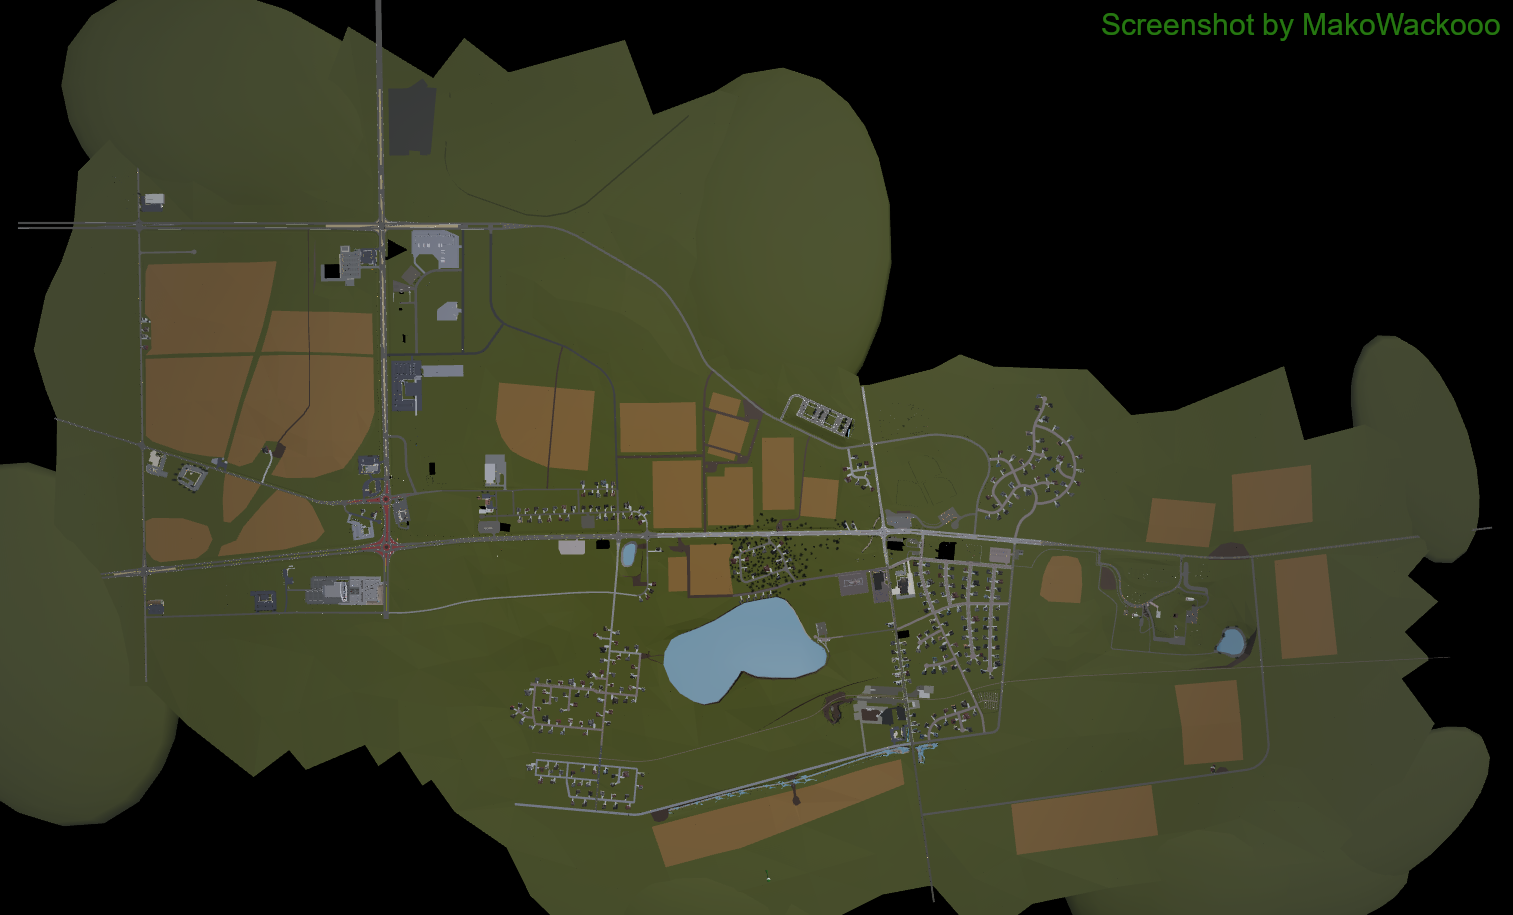 Greenville Maps